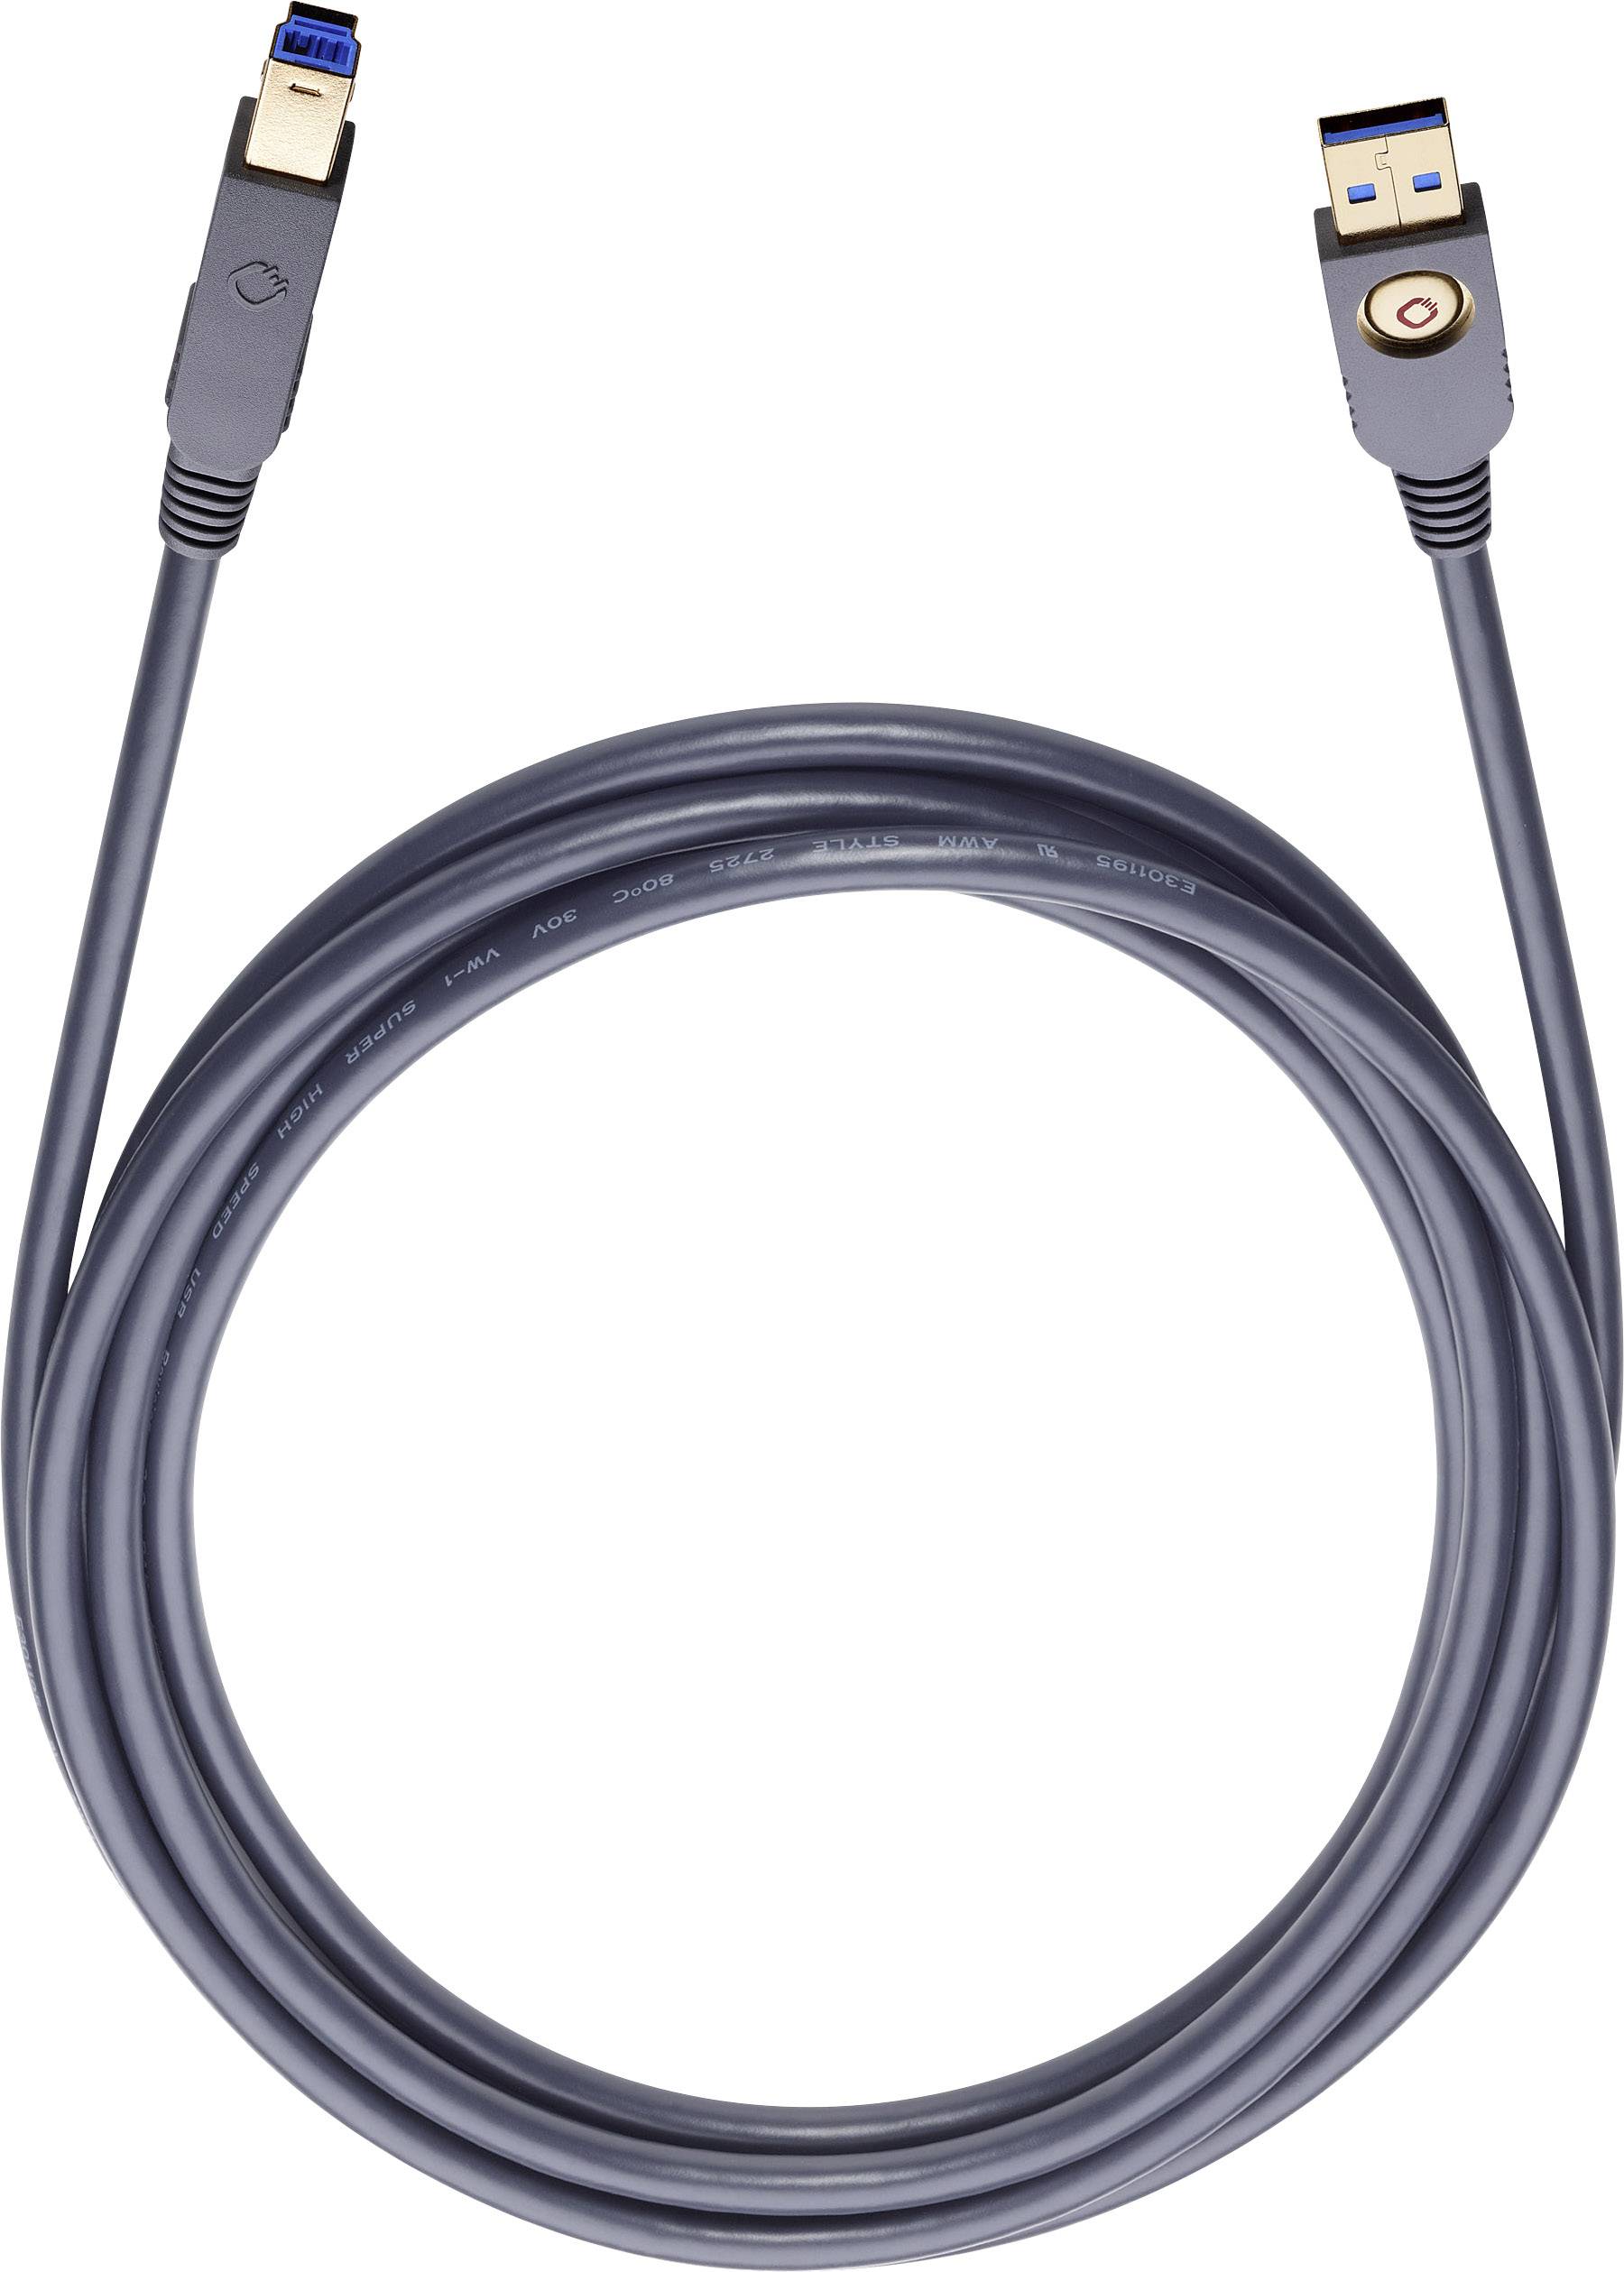 OEHLBACH USB 3.0 Anschlusskabel [1x USB 3.0 Stecker A - 1x USB 3.0 Stecker B] 5 m Schwarz vergoldete